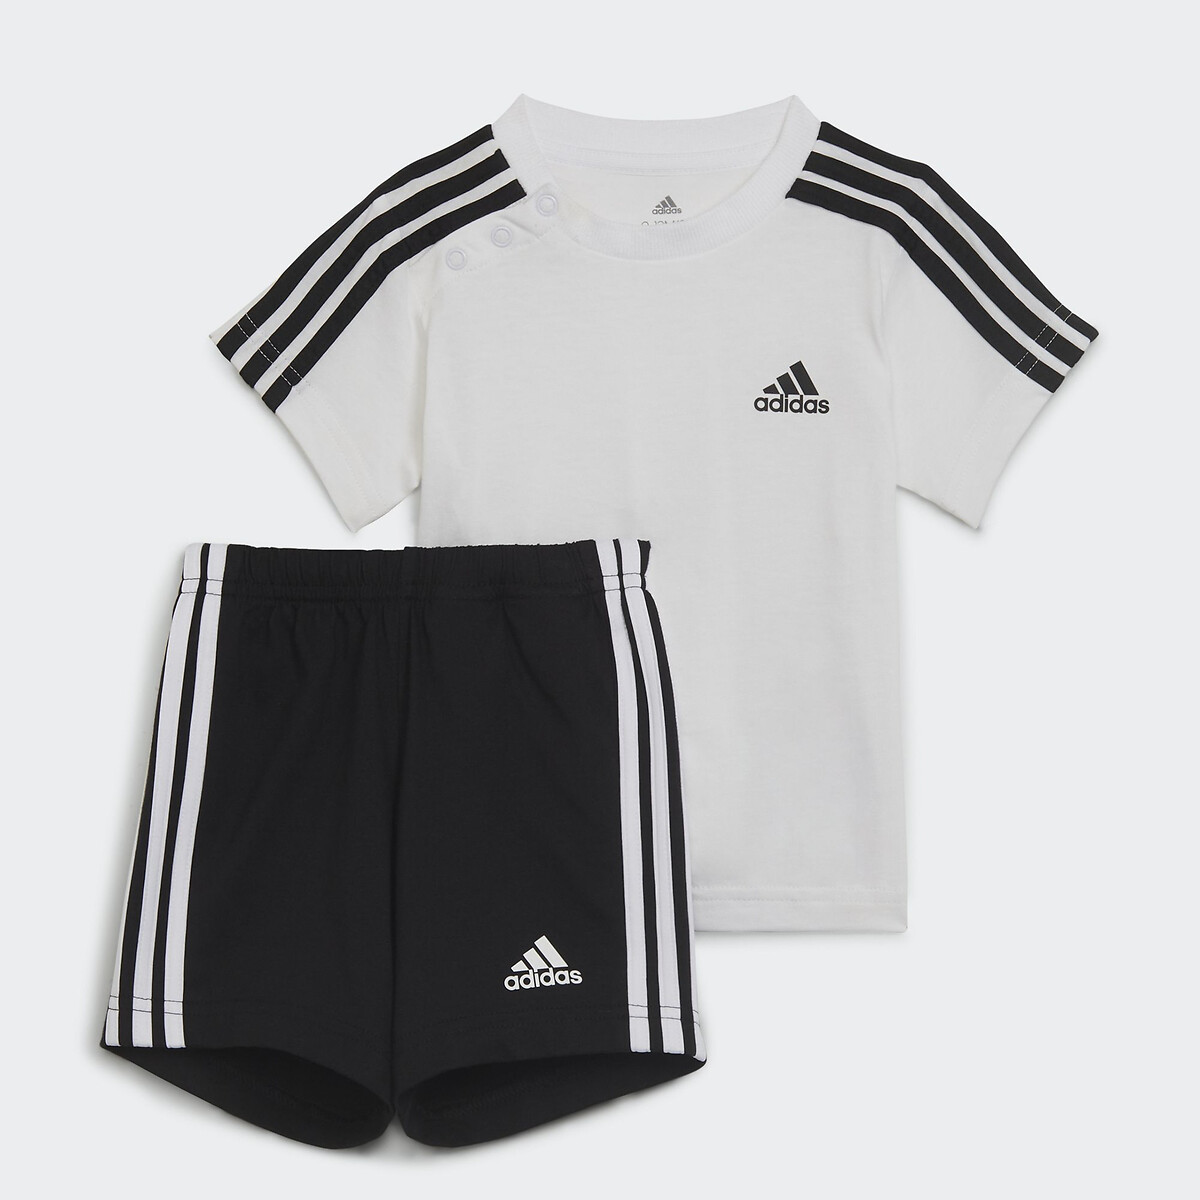 Sport Shorts Mixte bébé Visiter la boutique adidasadidas LB St KN Short 